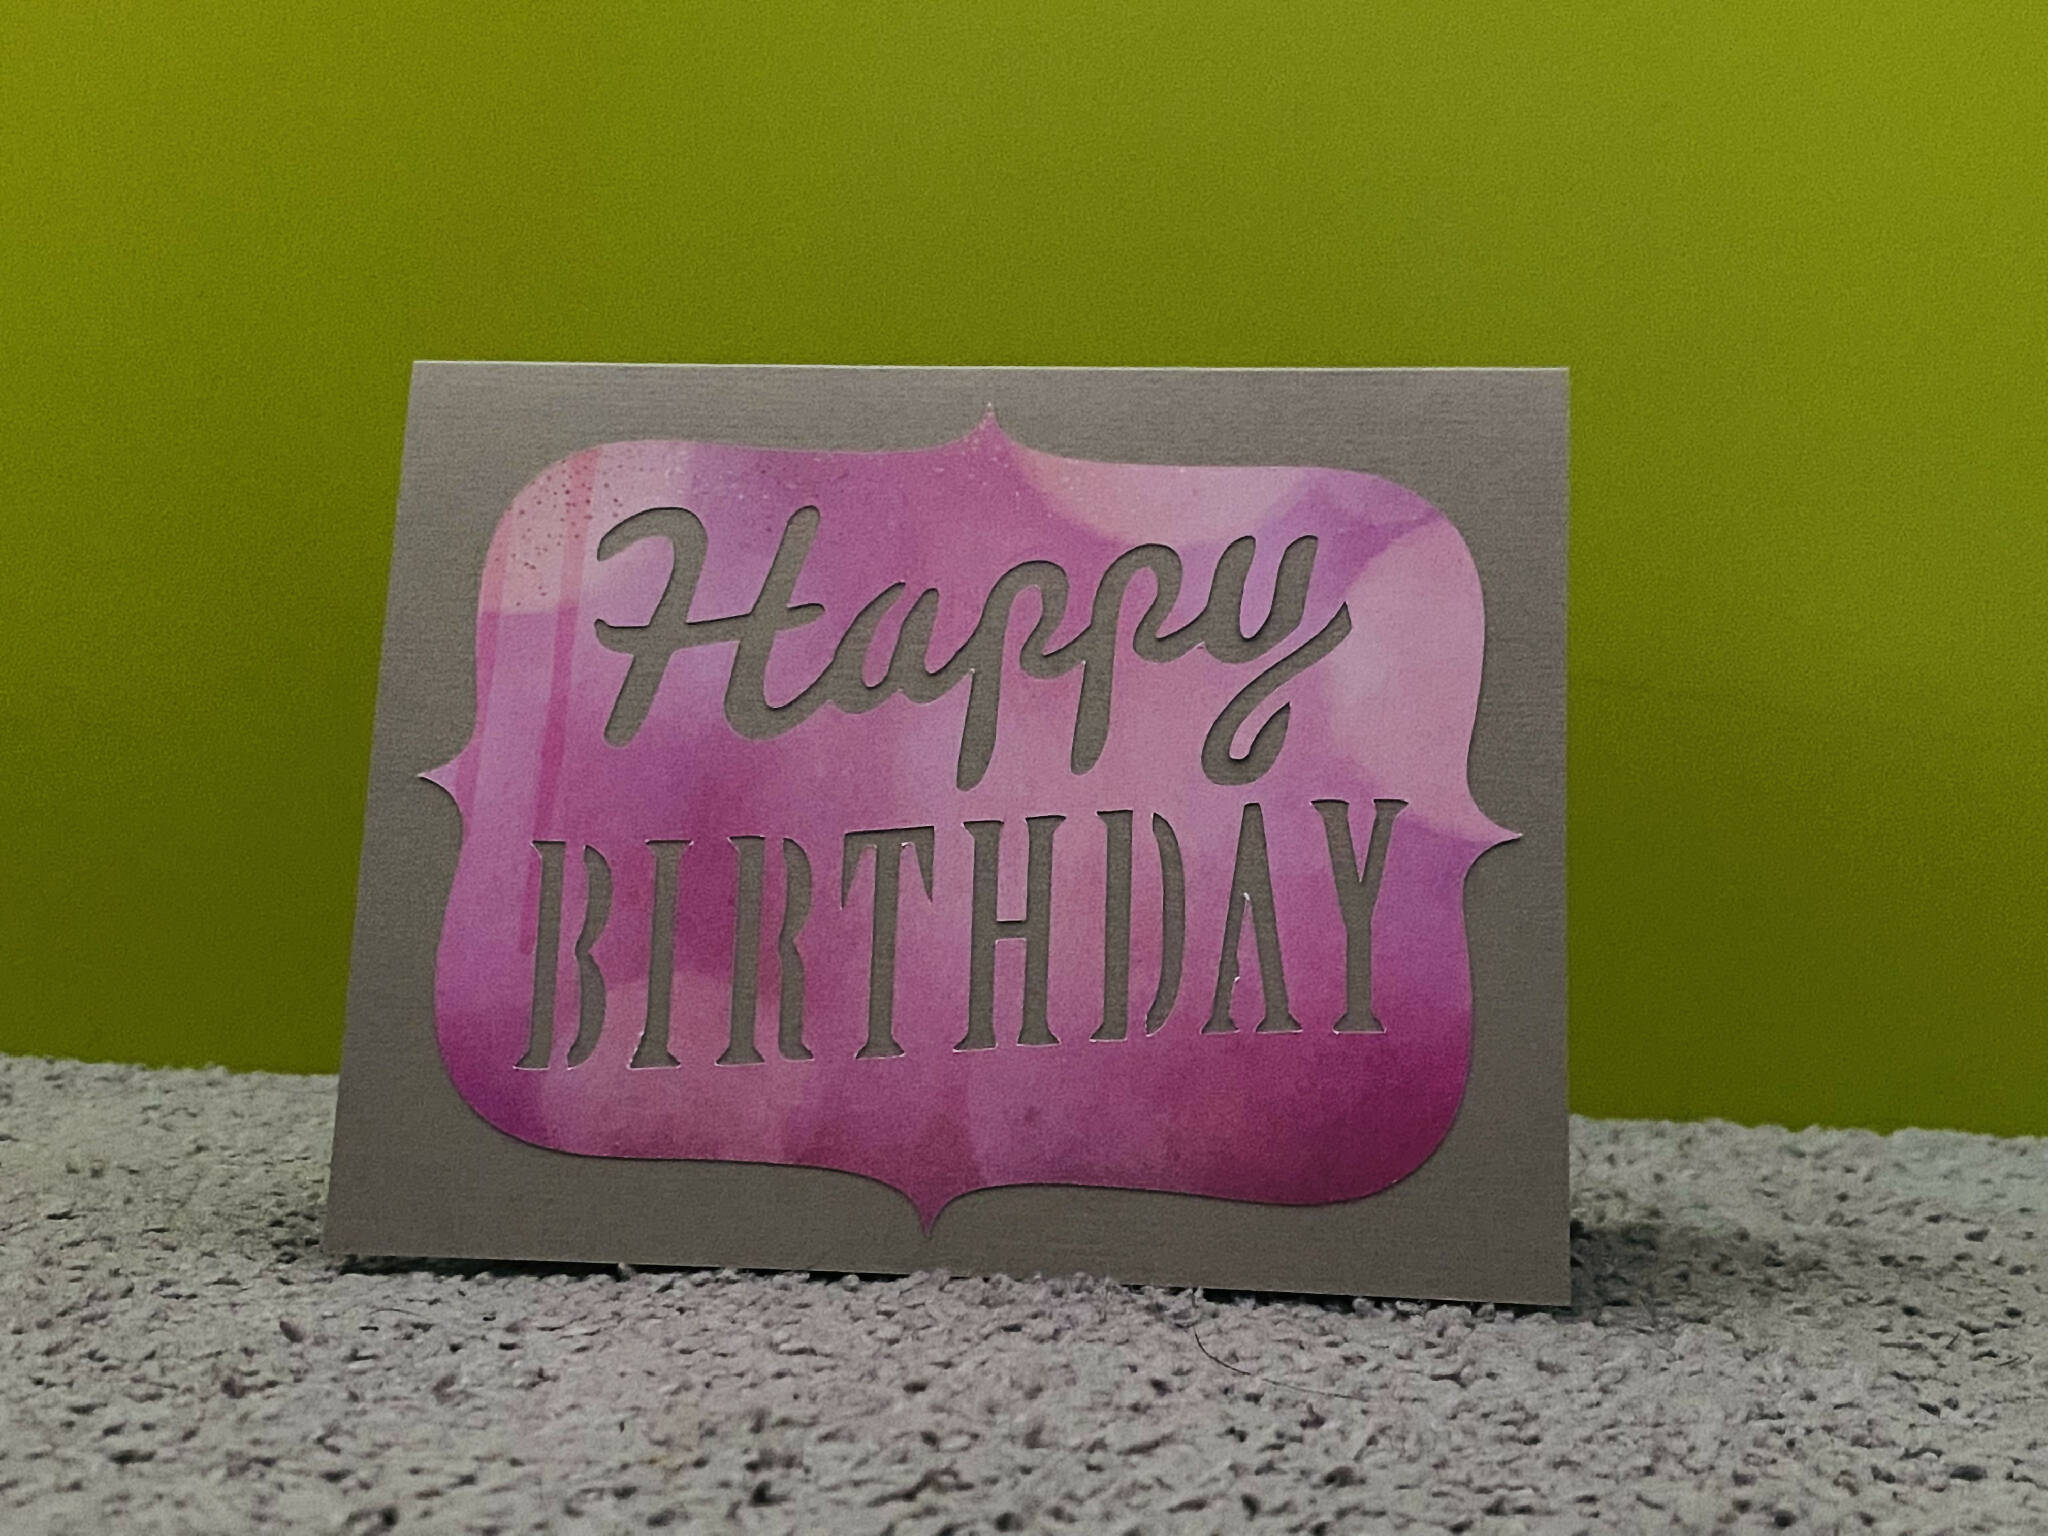 Happy birthday card - pink